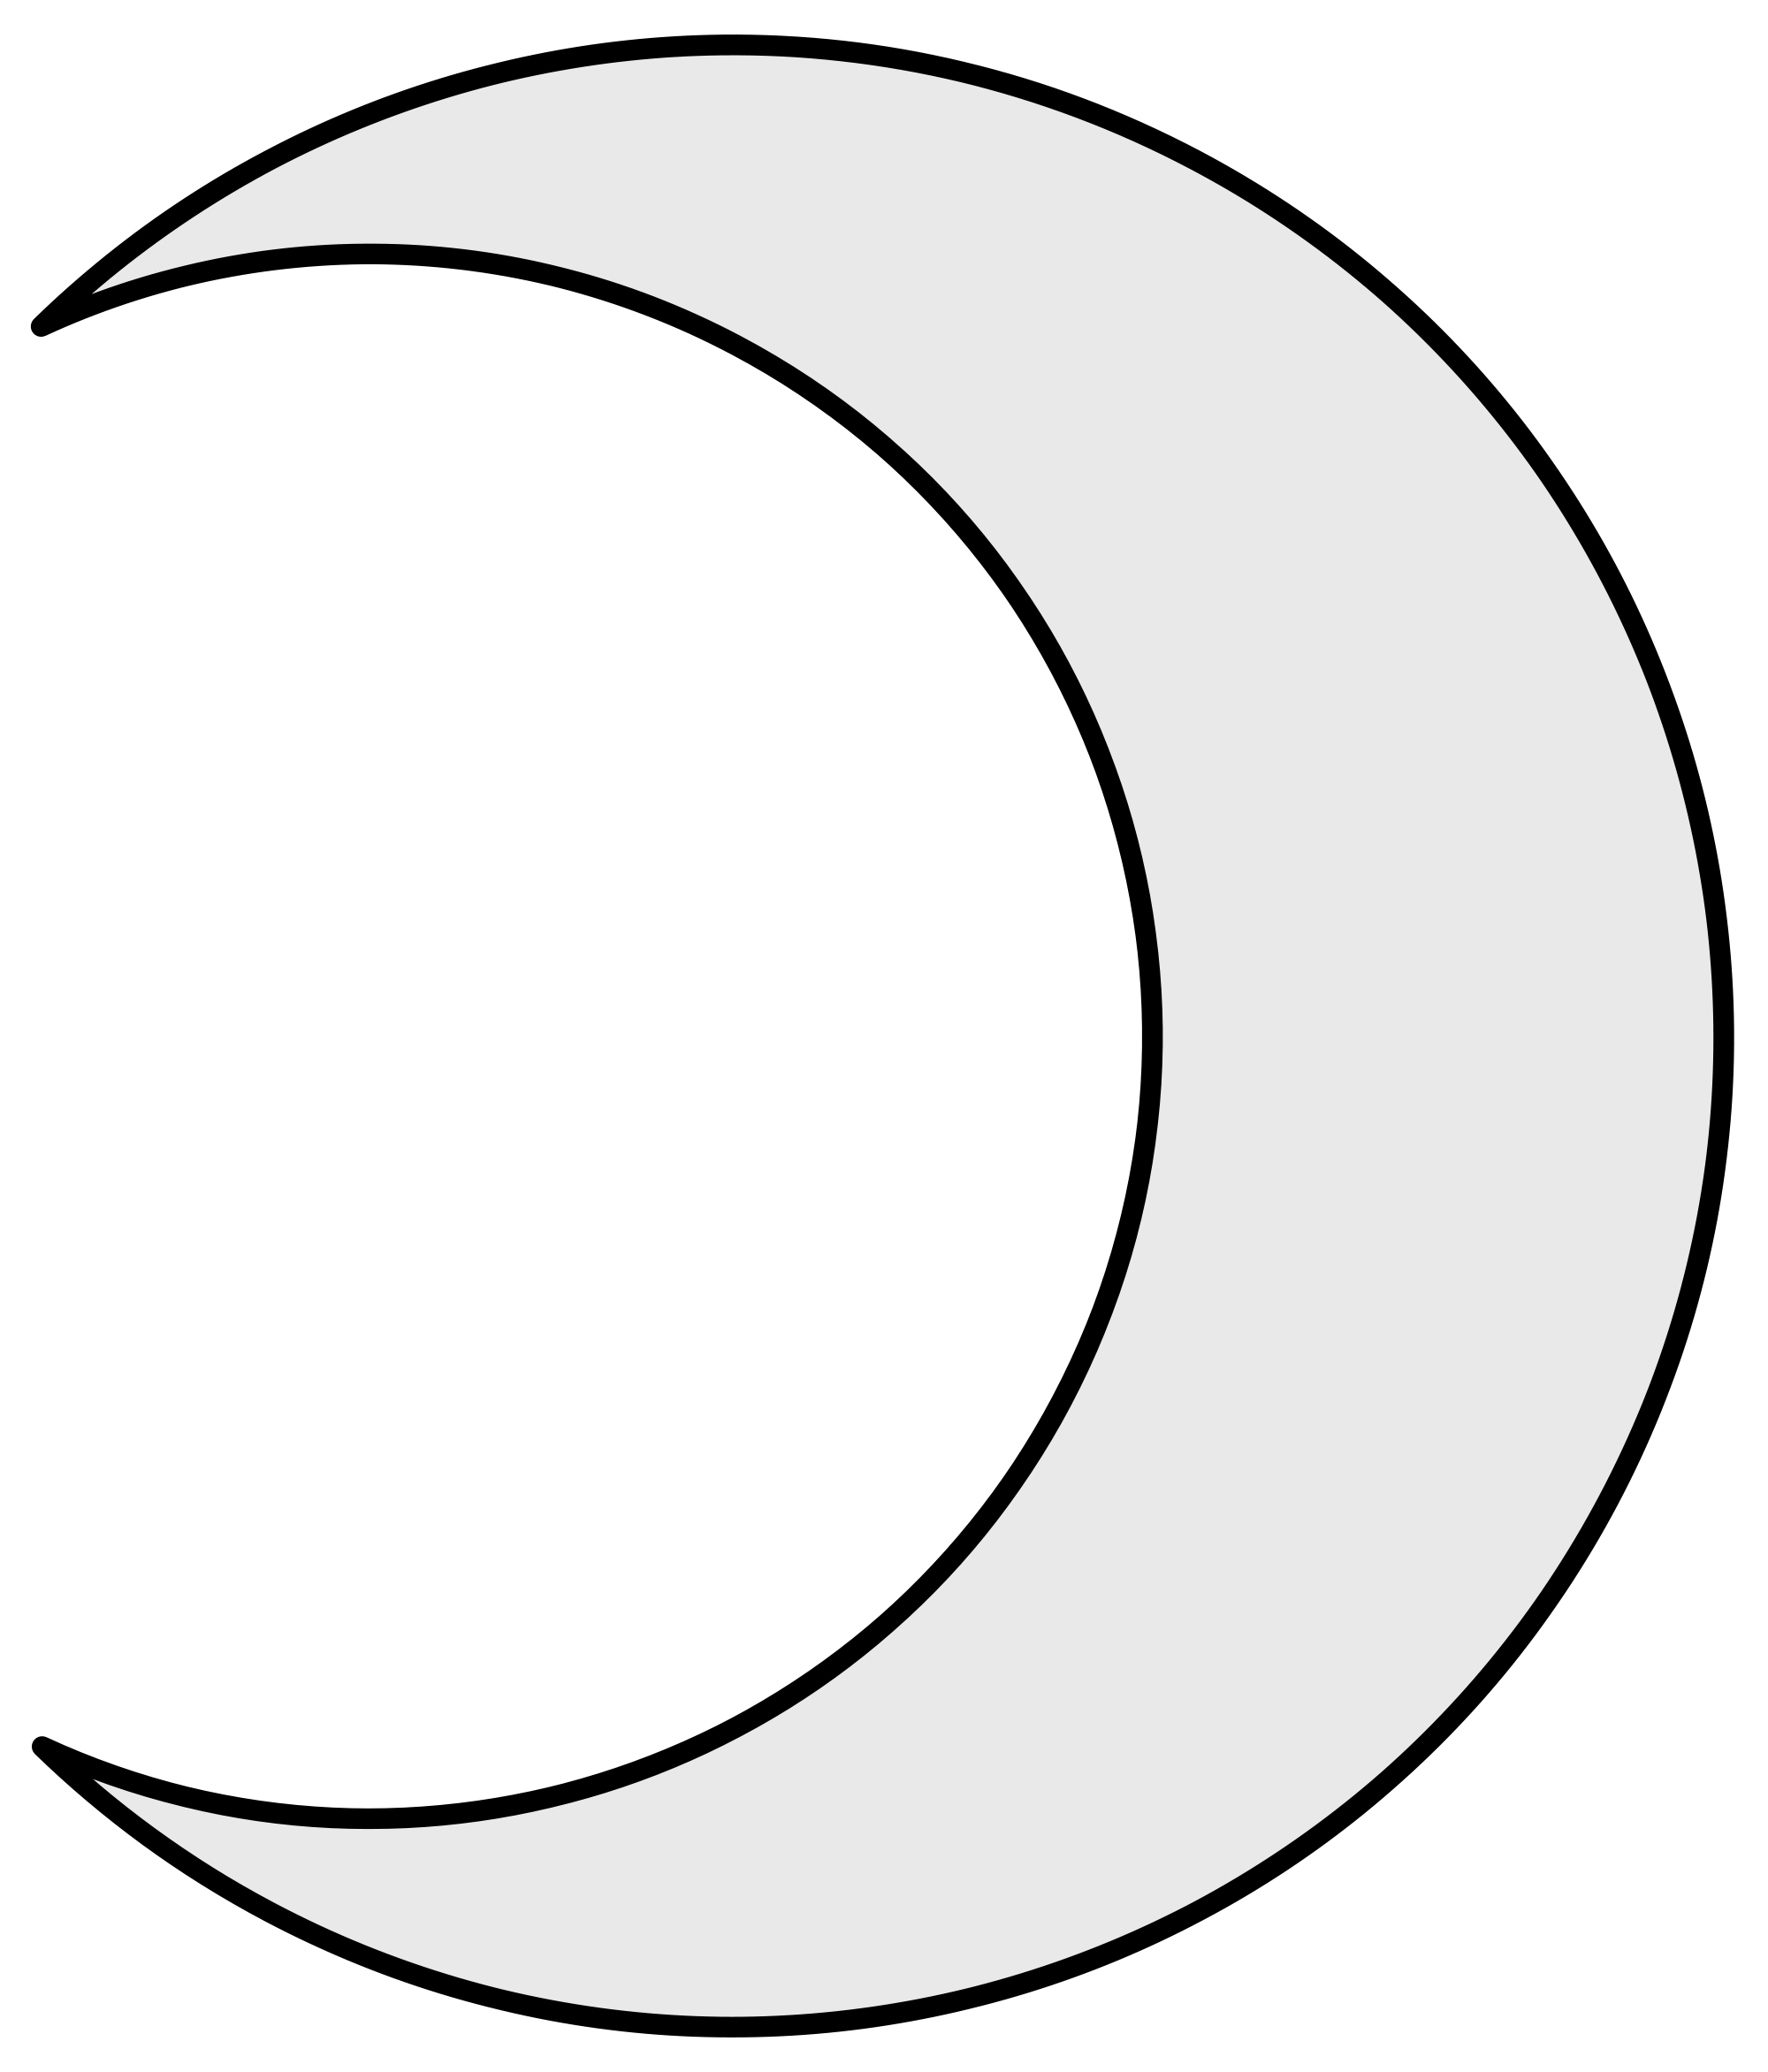 File:Coa Illustration Elements Planet Moon.svg - Wikimedia Commons